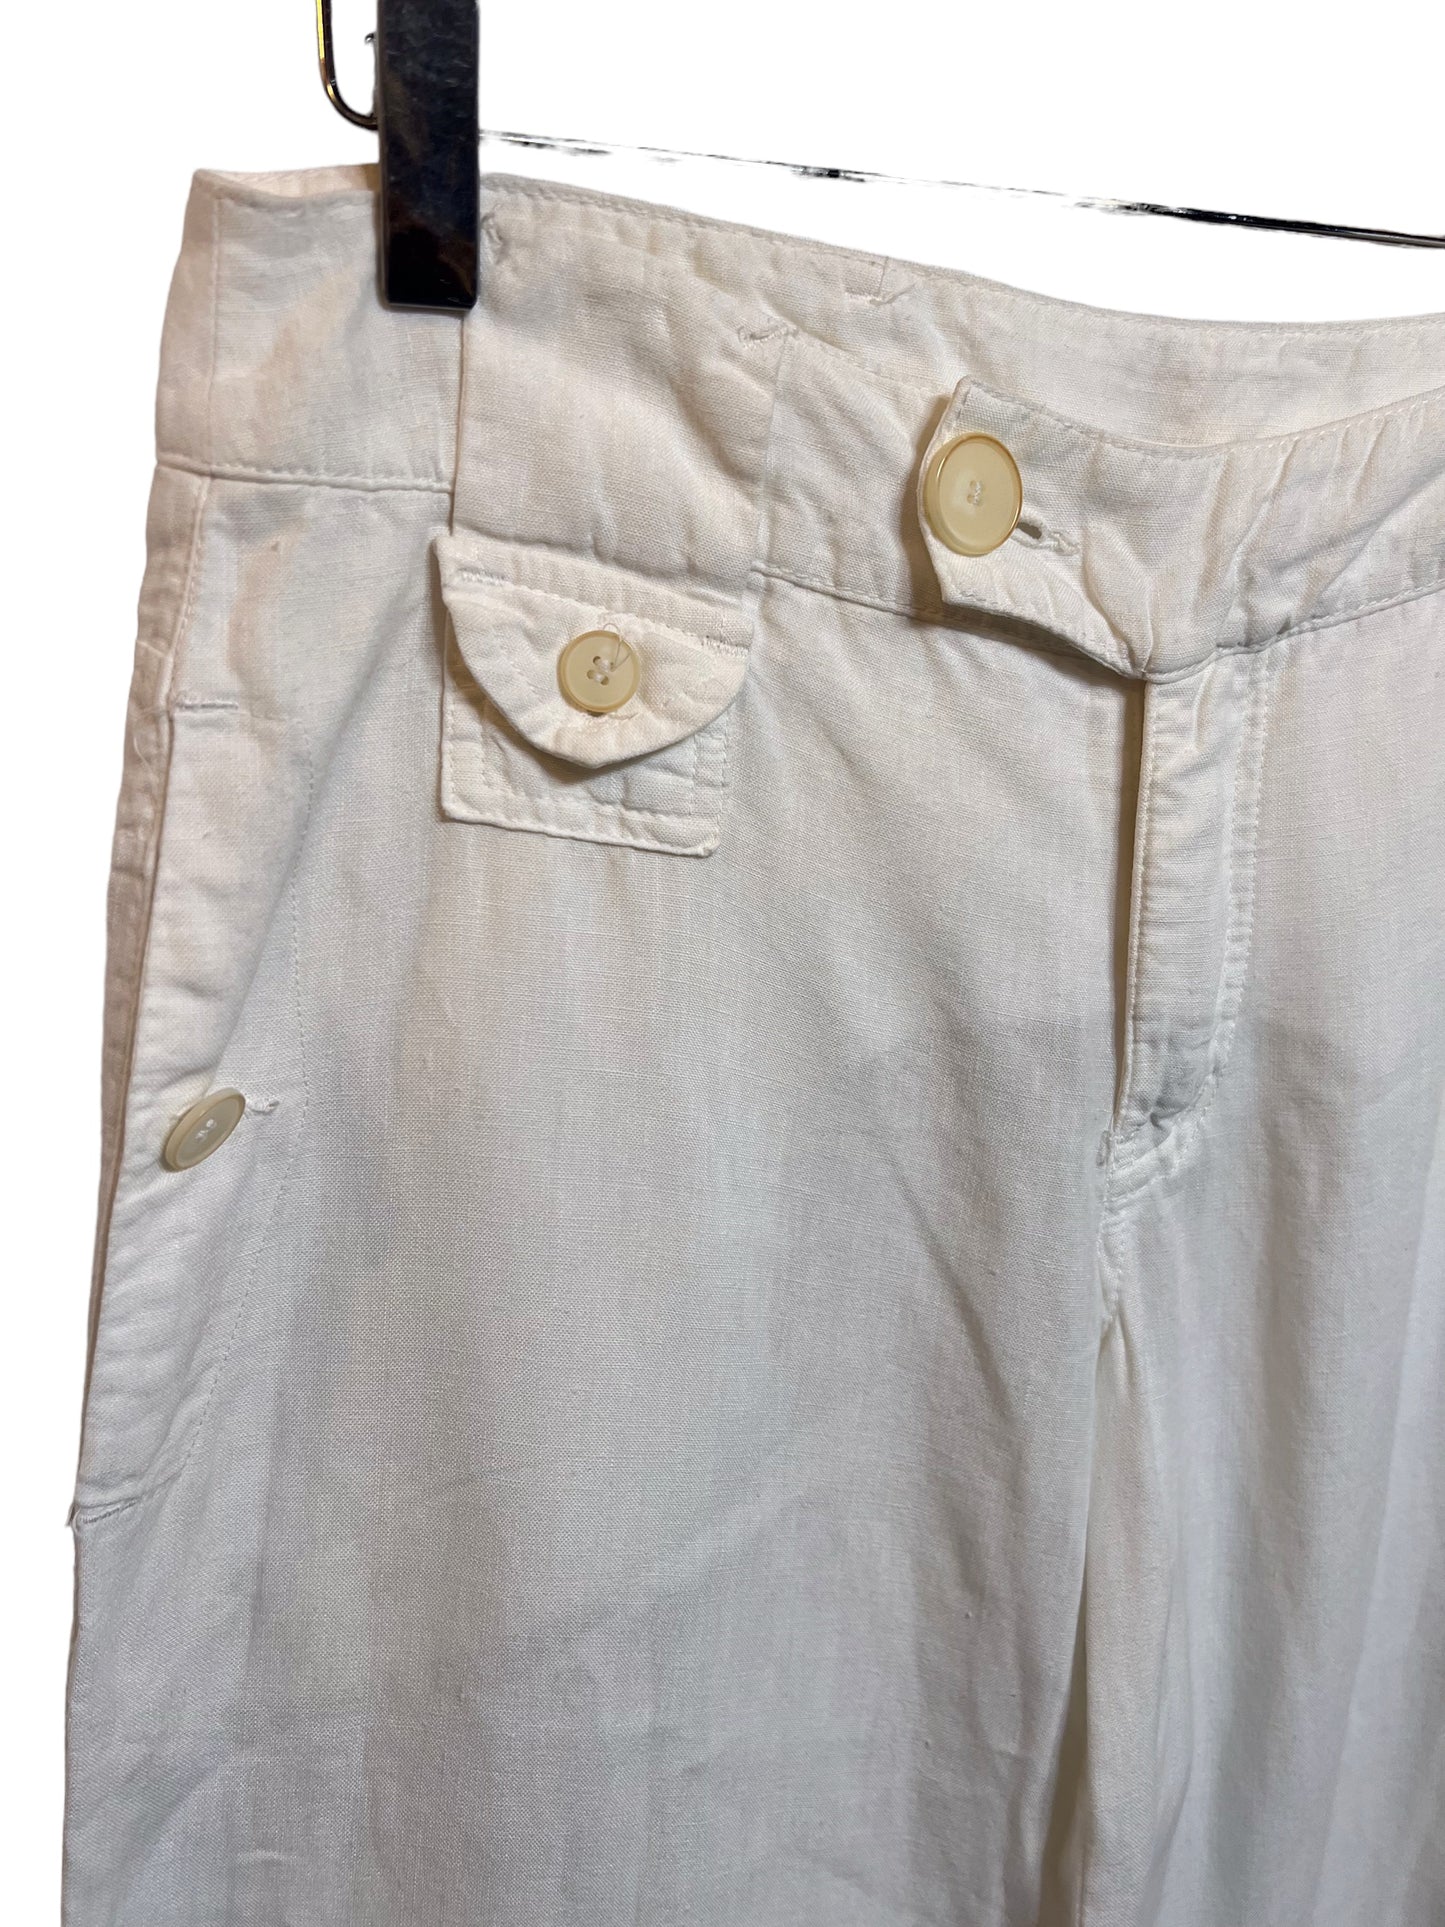 Women’s White Linen Trousers (Size W30)